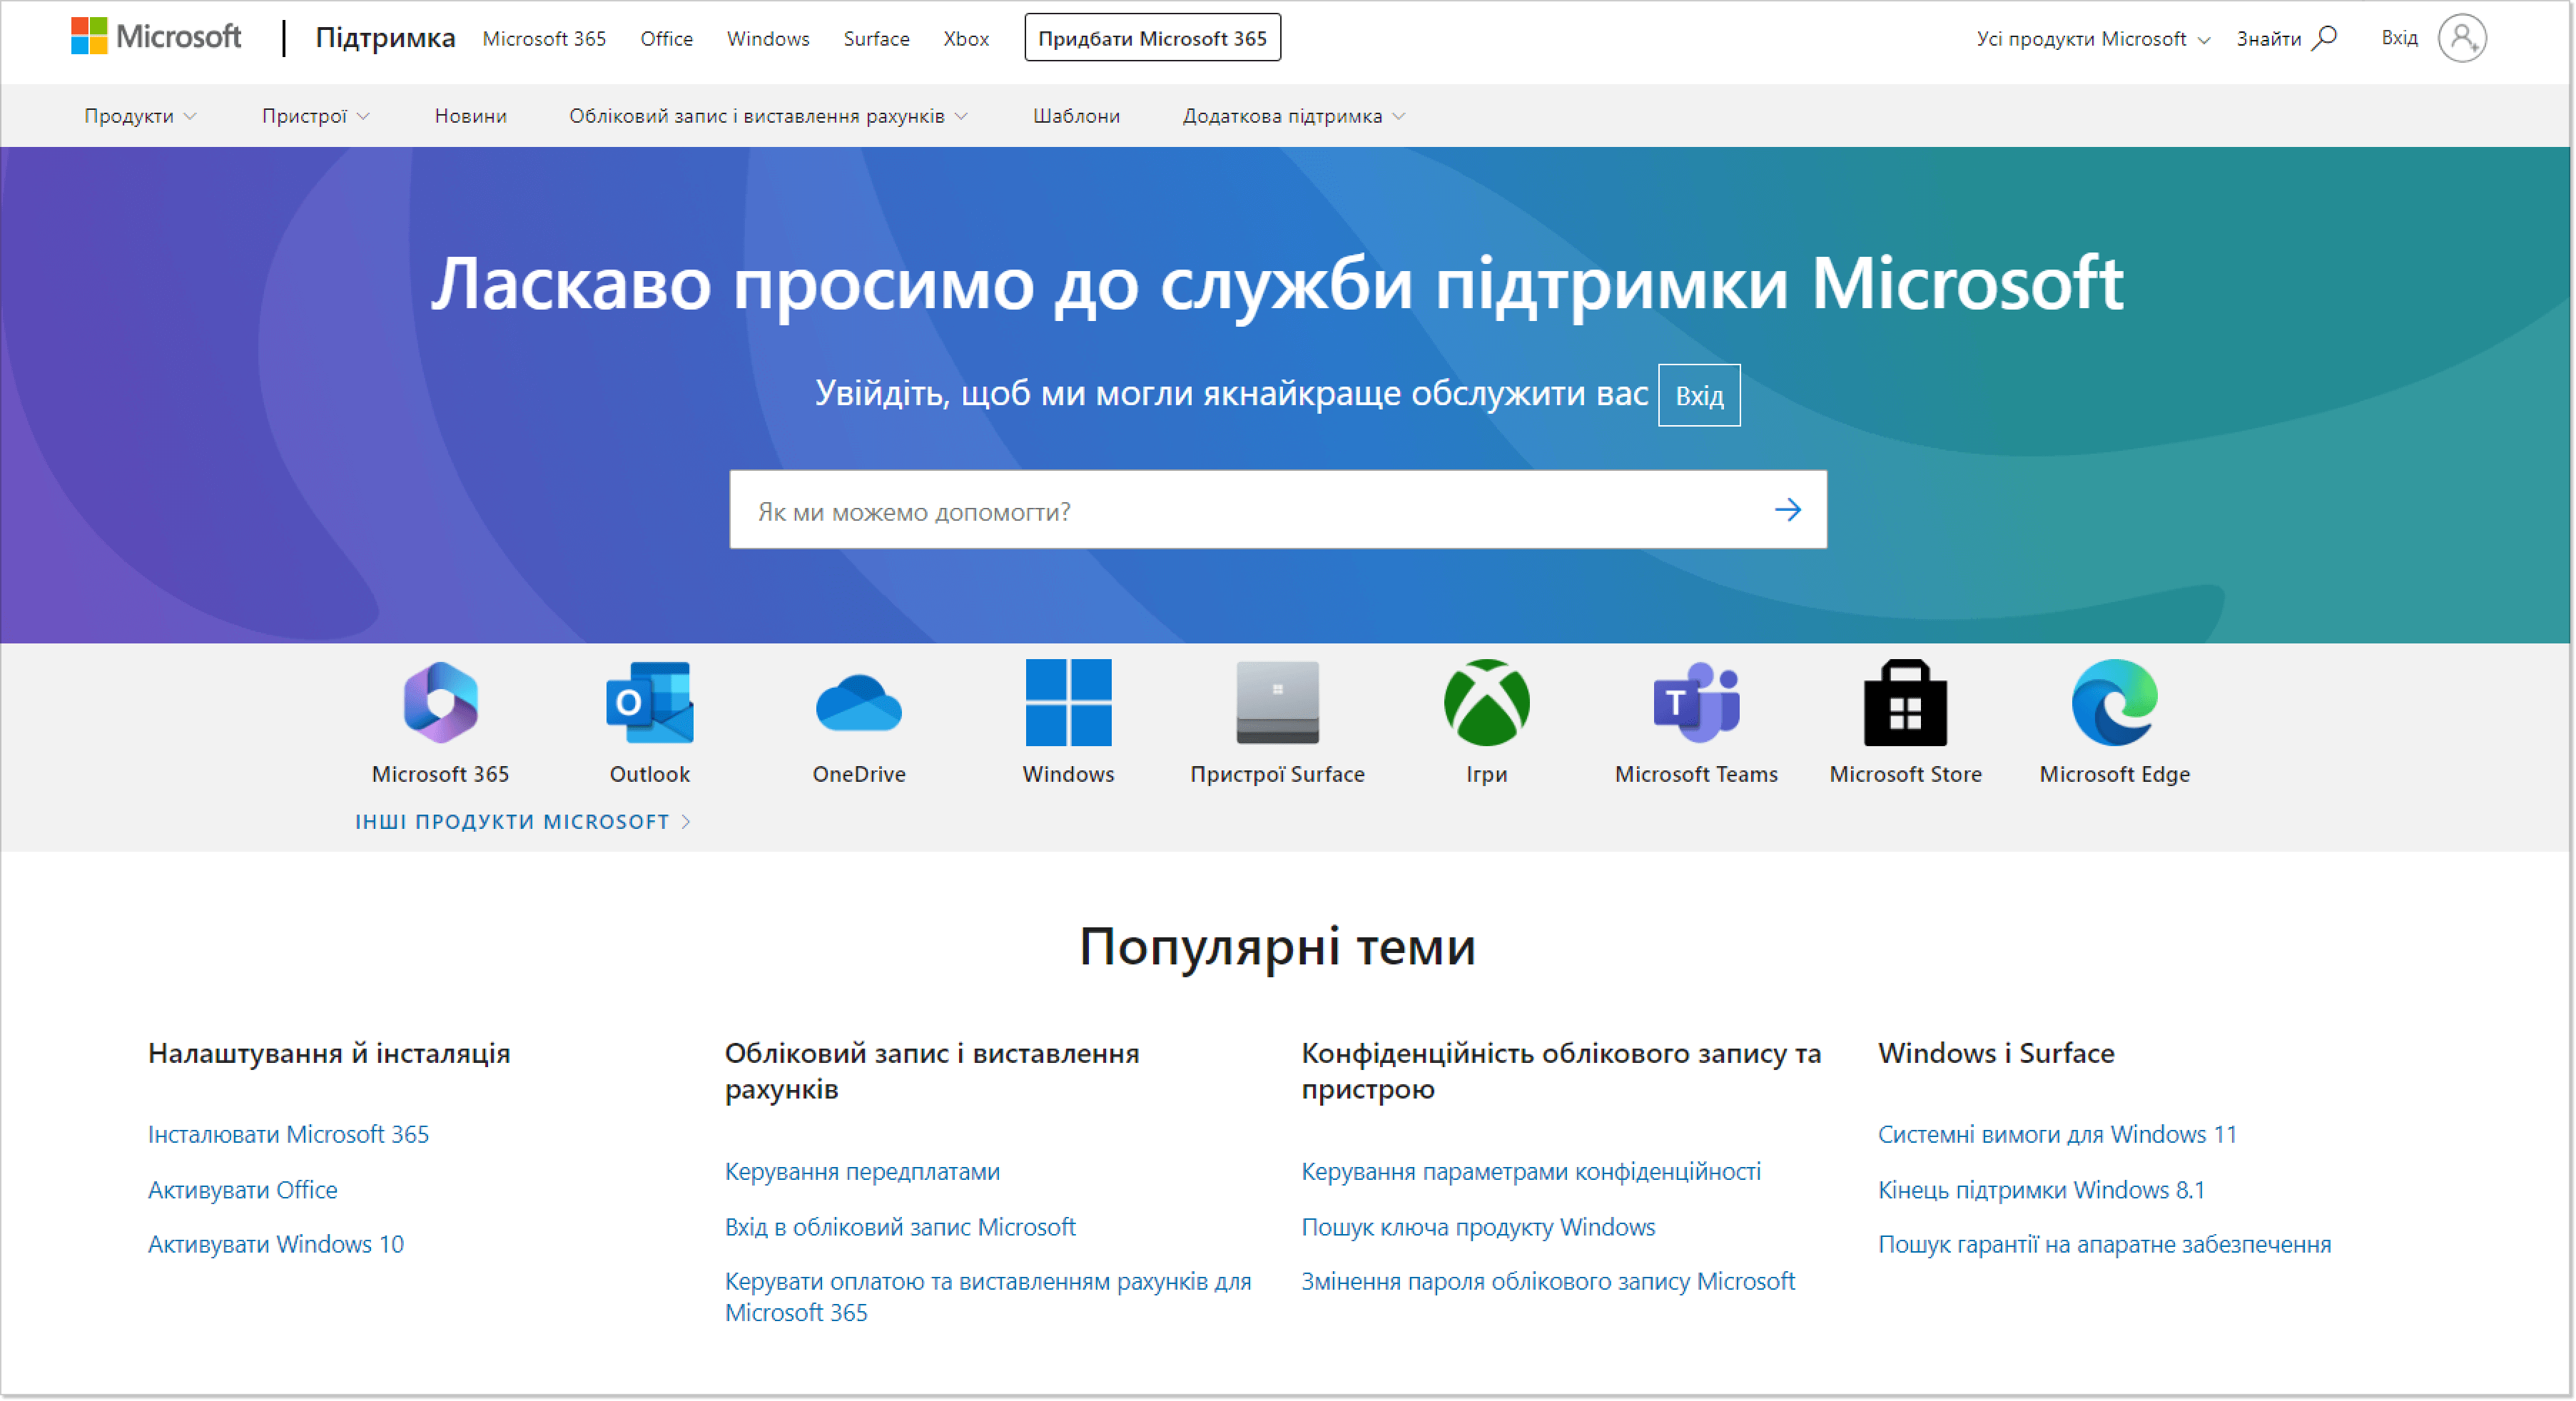 Microsoft FAQ page screenshot